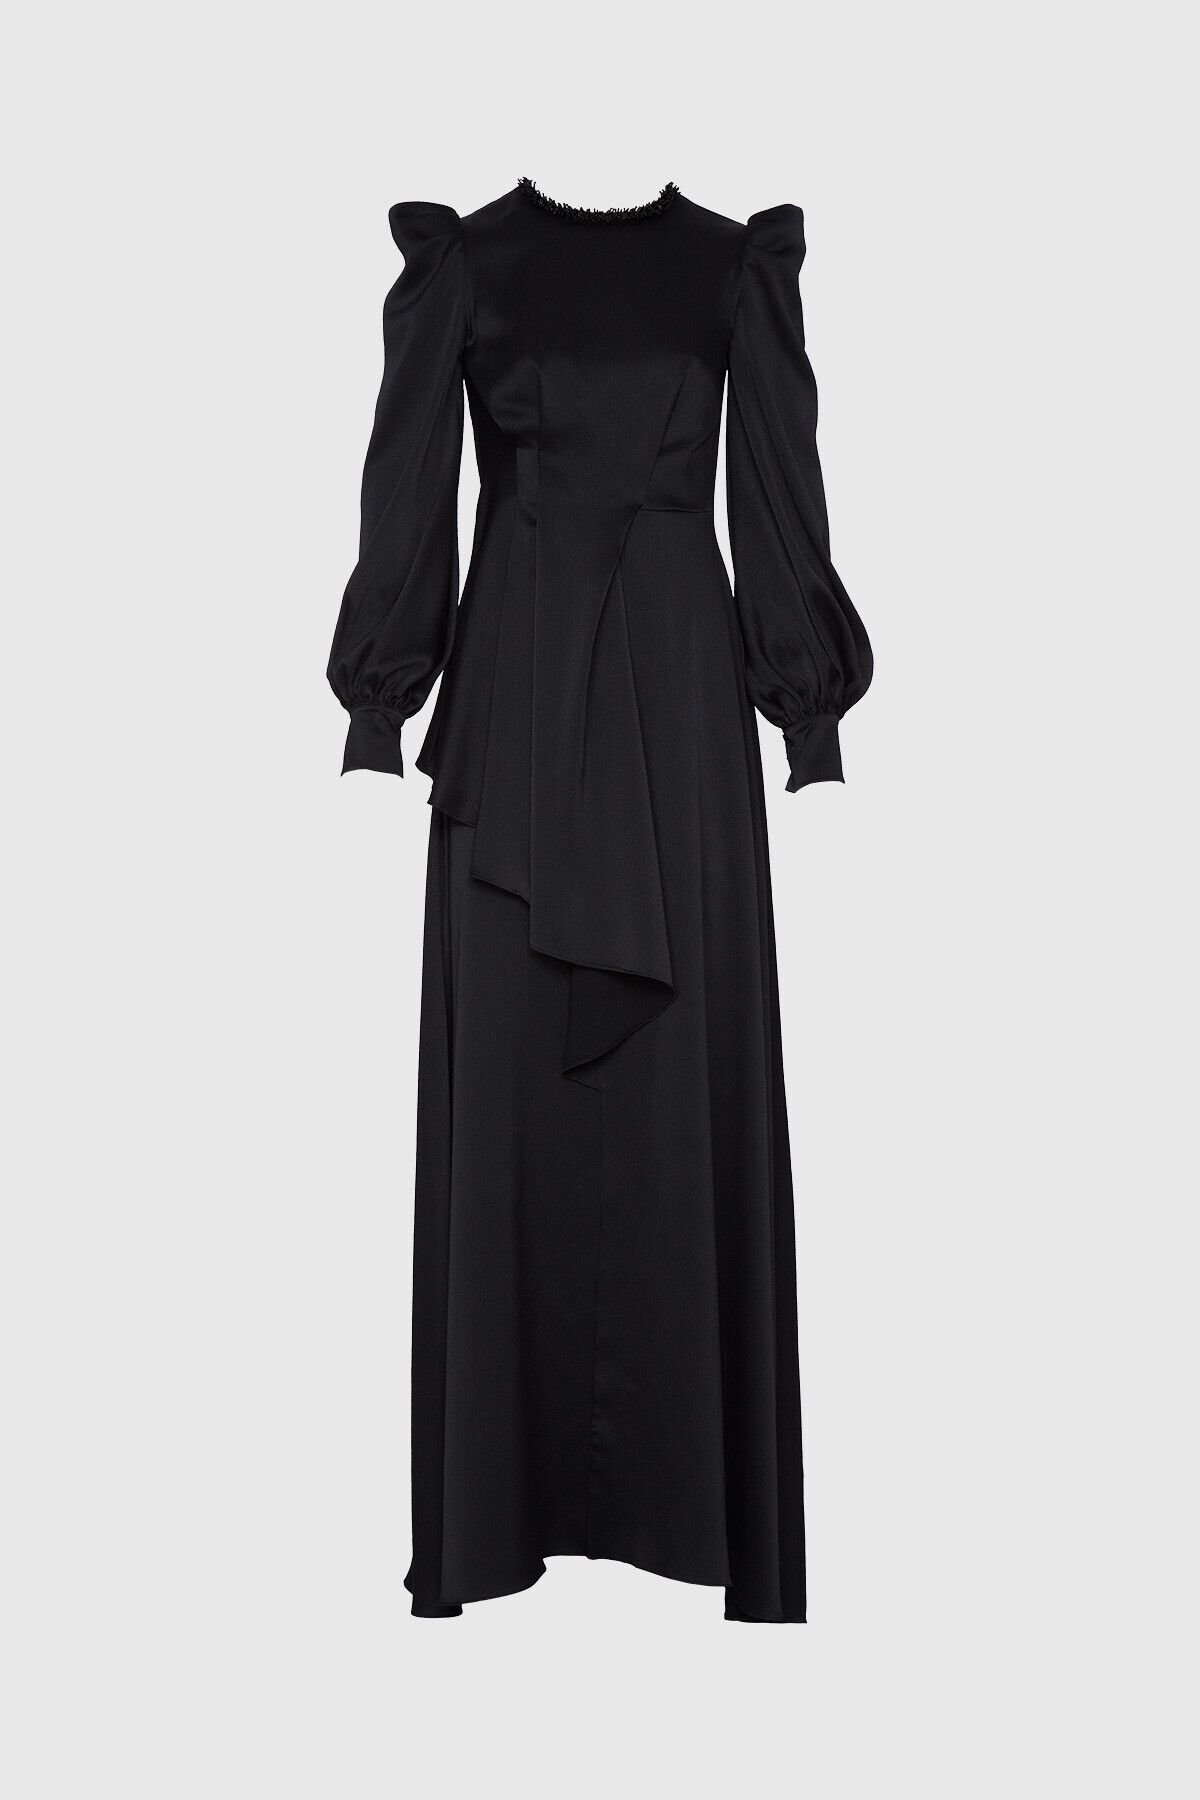 Stone Detailed Black Long Dress